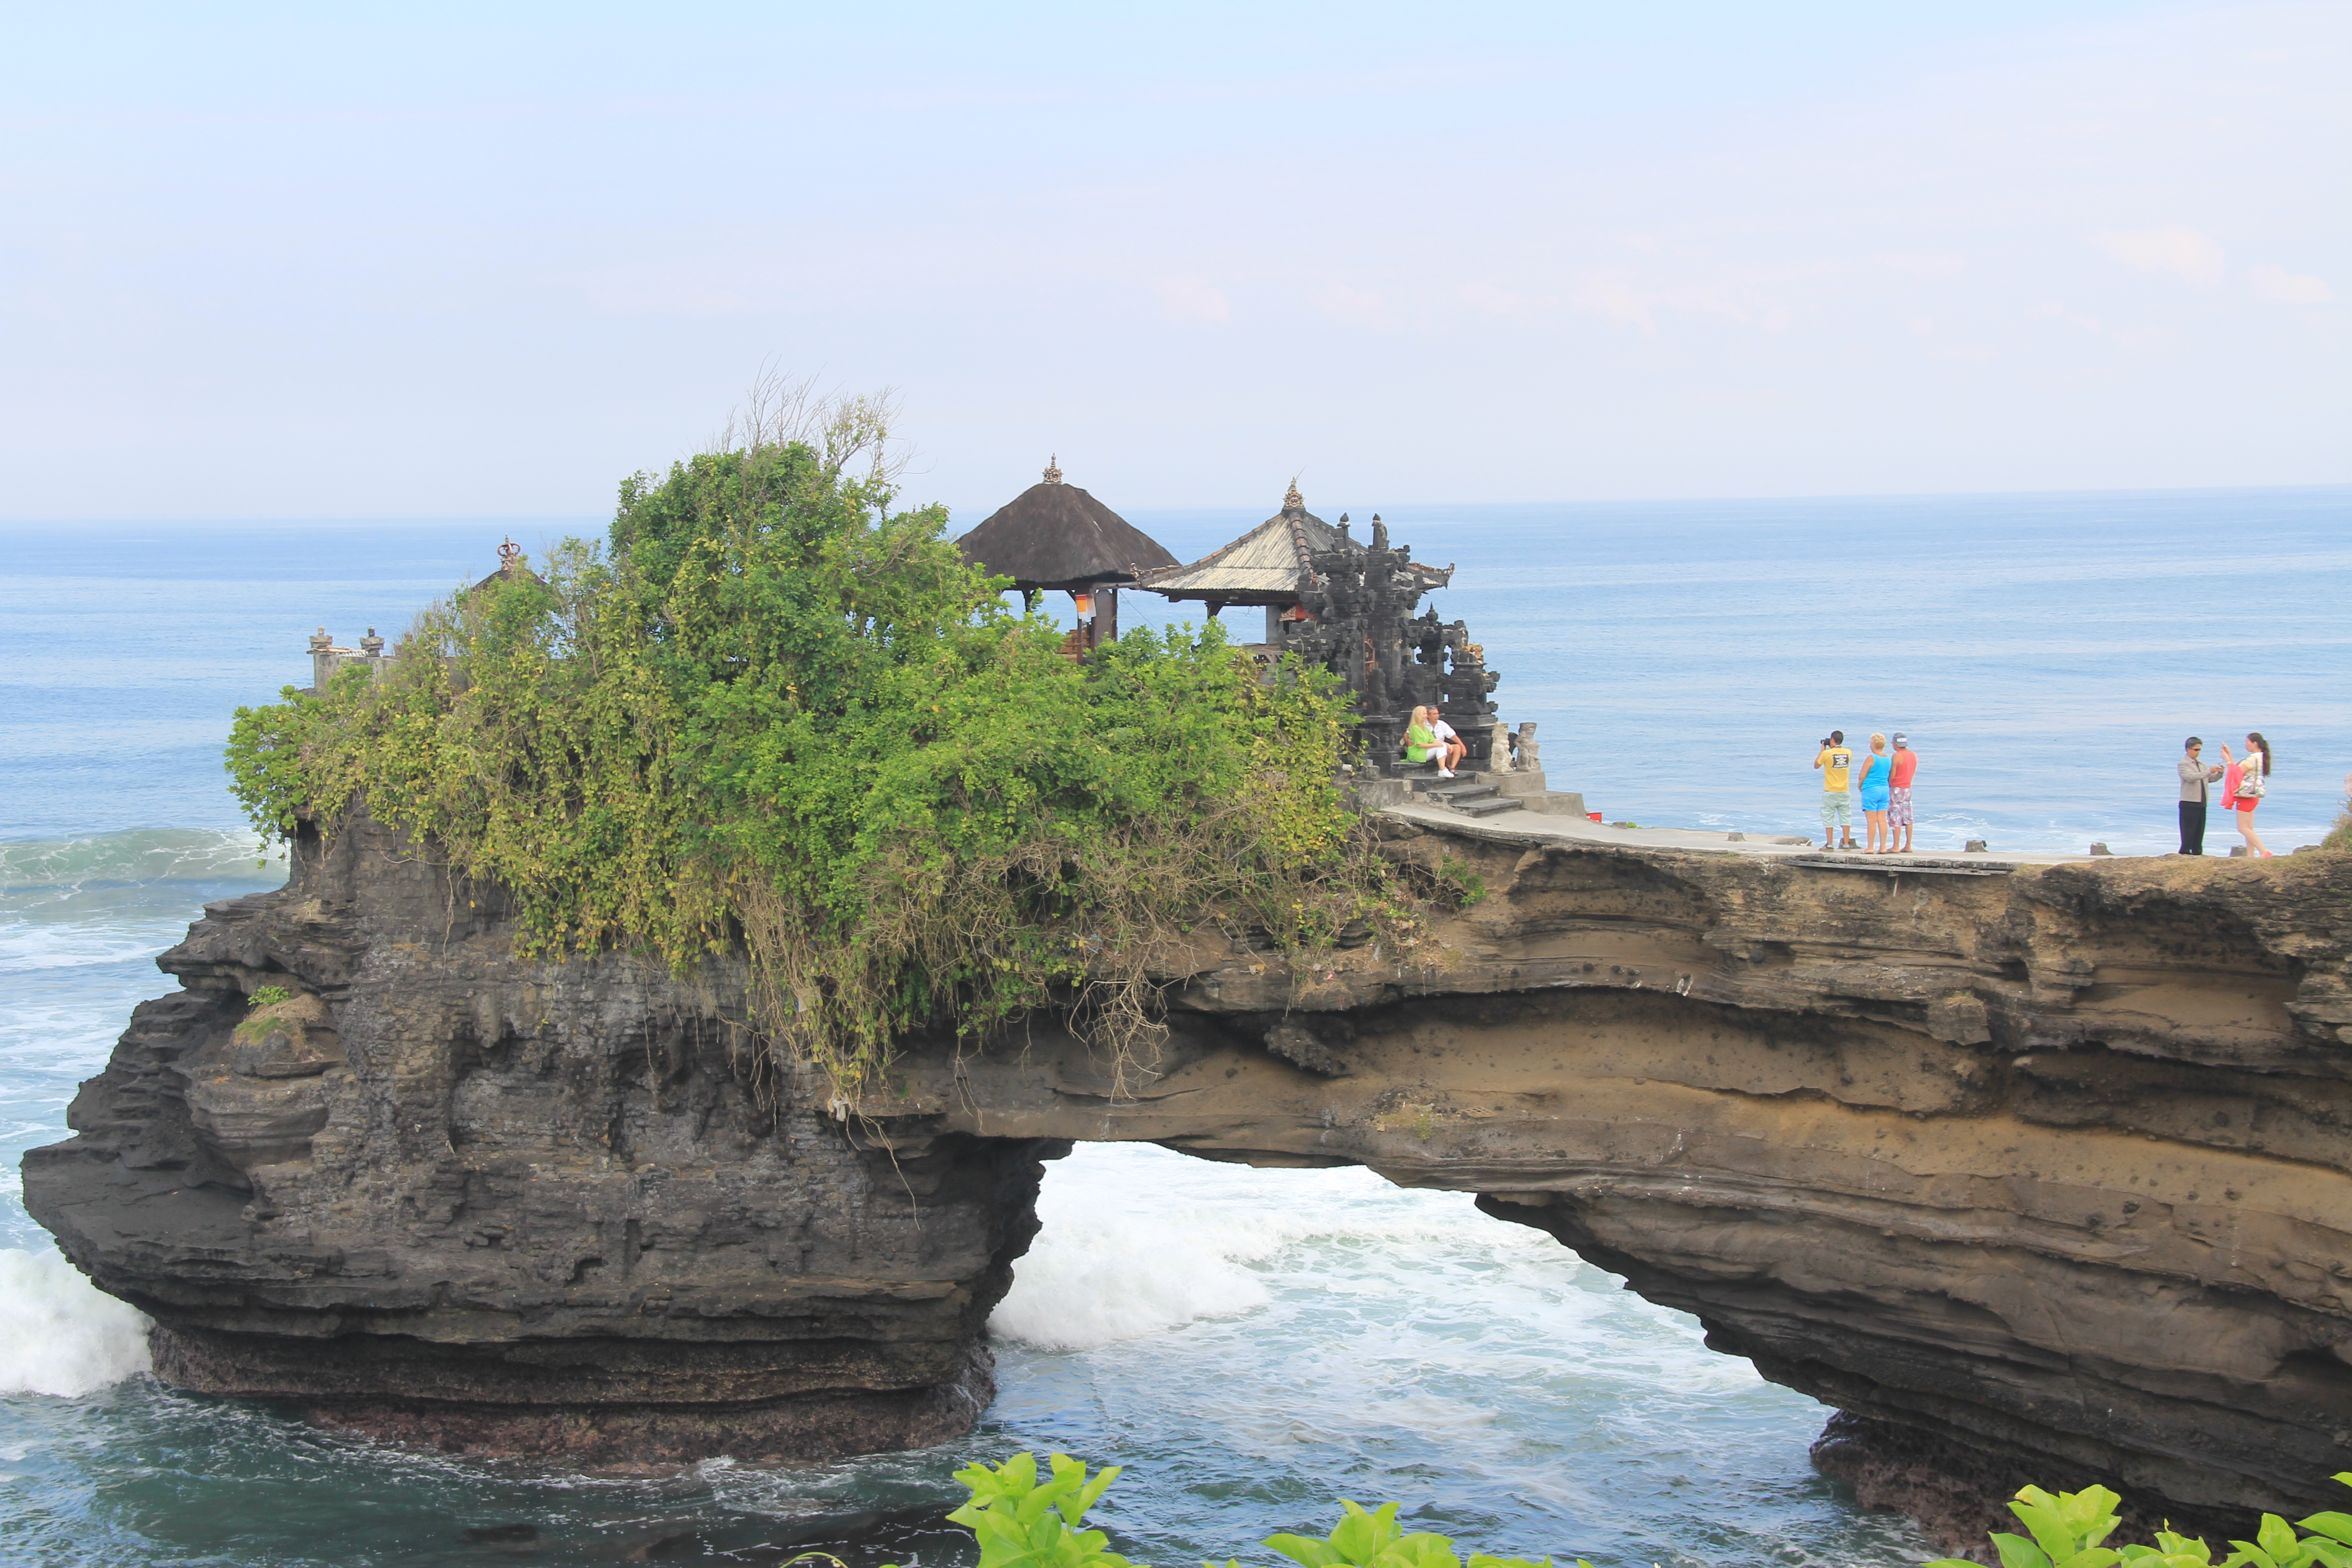 File:Bali pura tanah lot.jpg - Wikimedia Commons